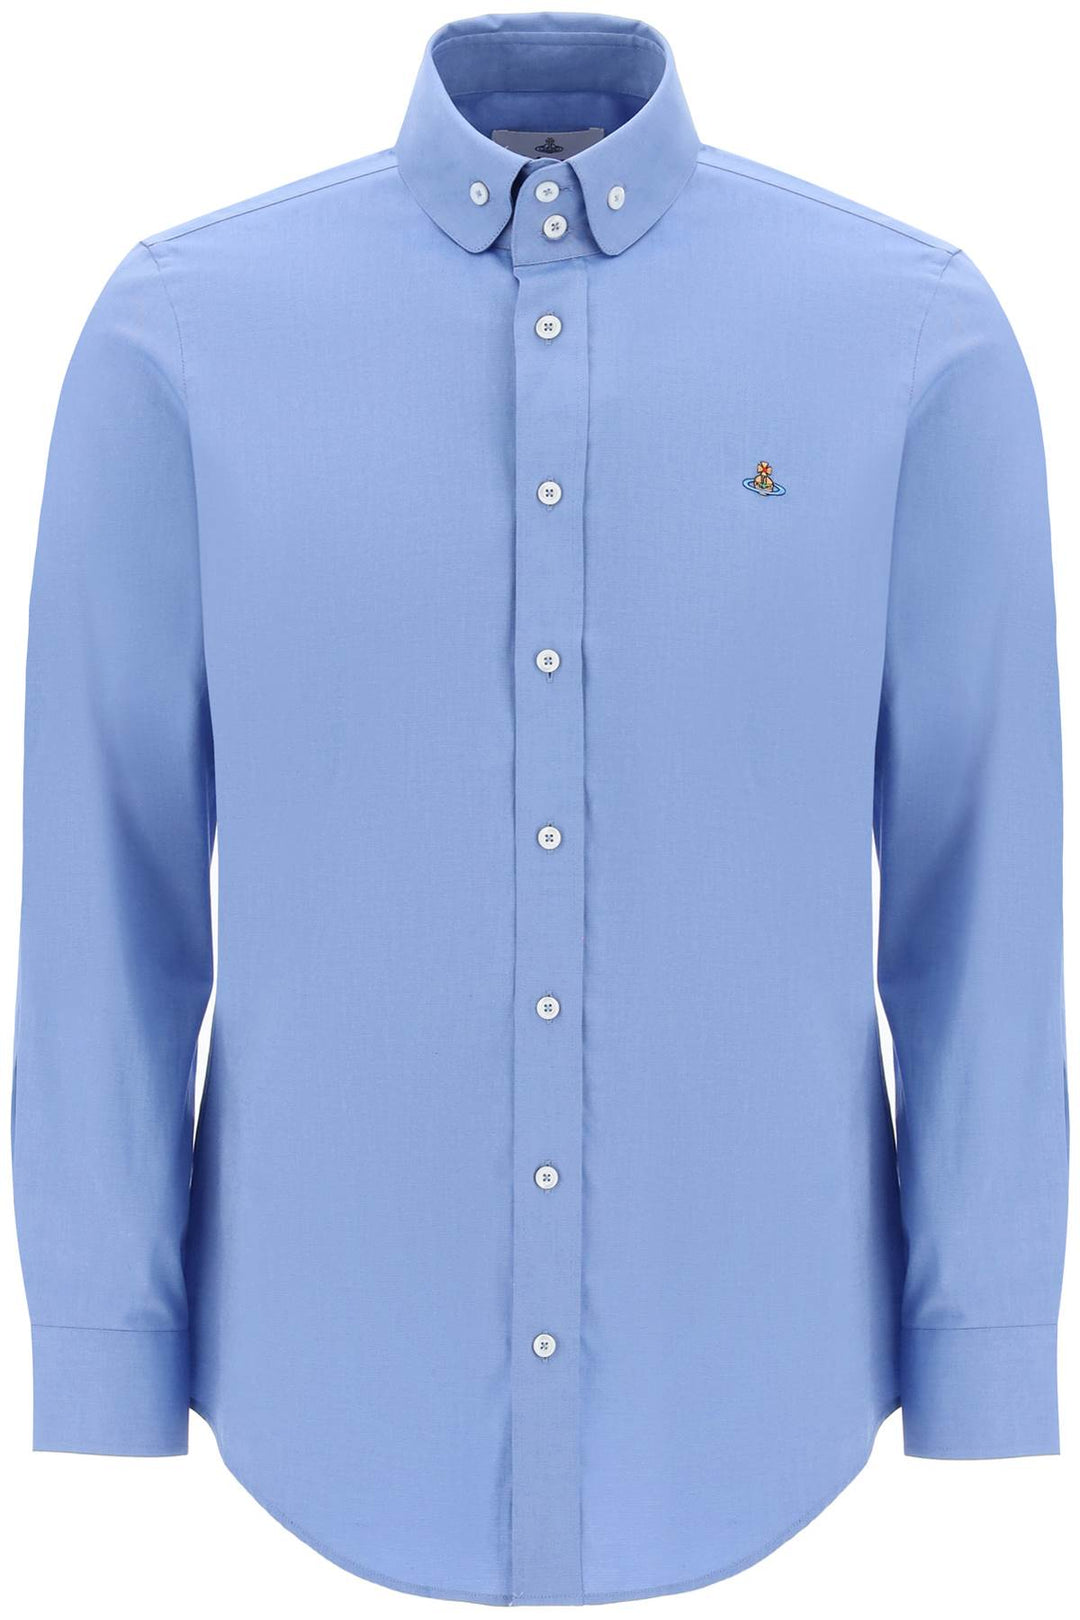 Vivienne Westwood Two Button Krall Shirt   Blu